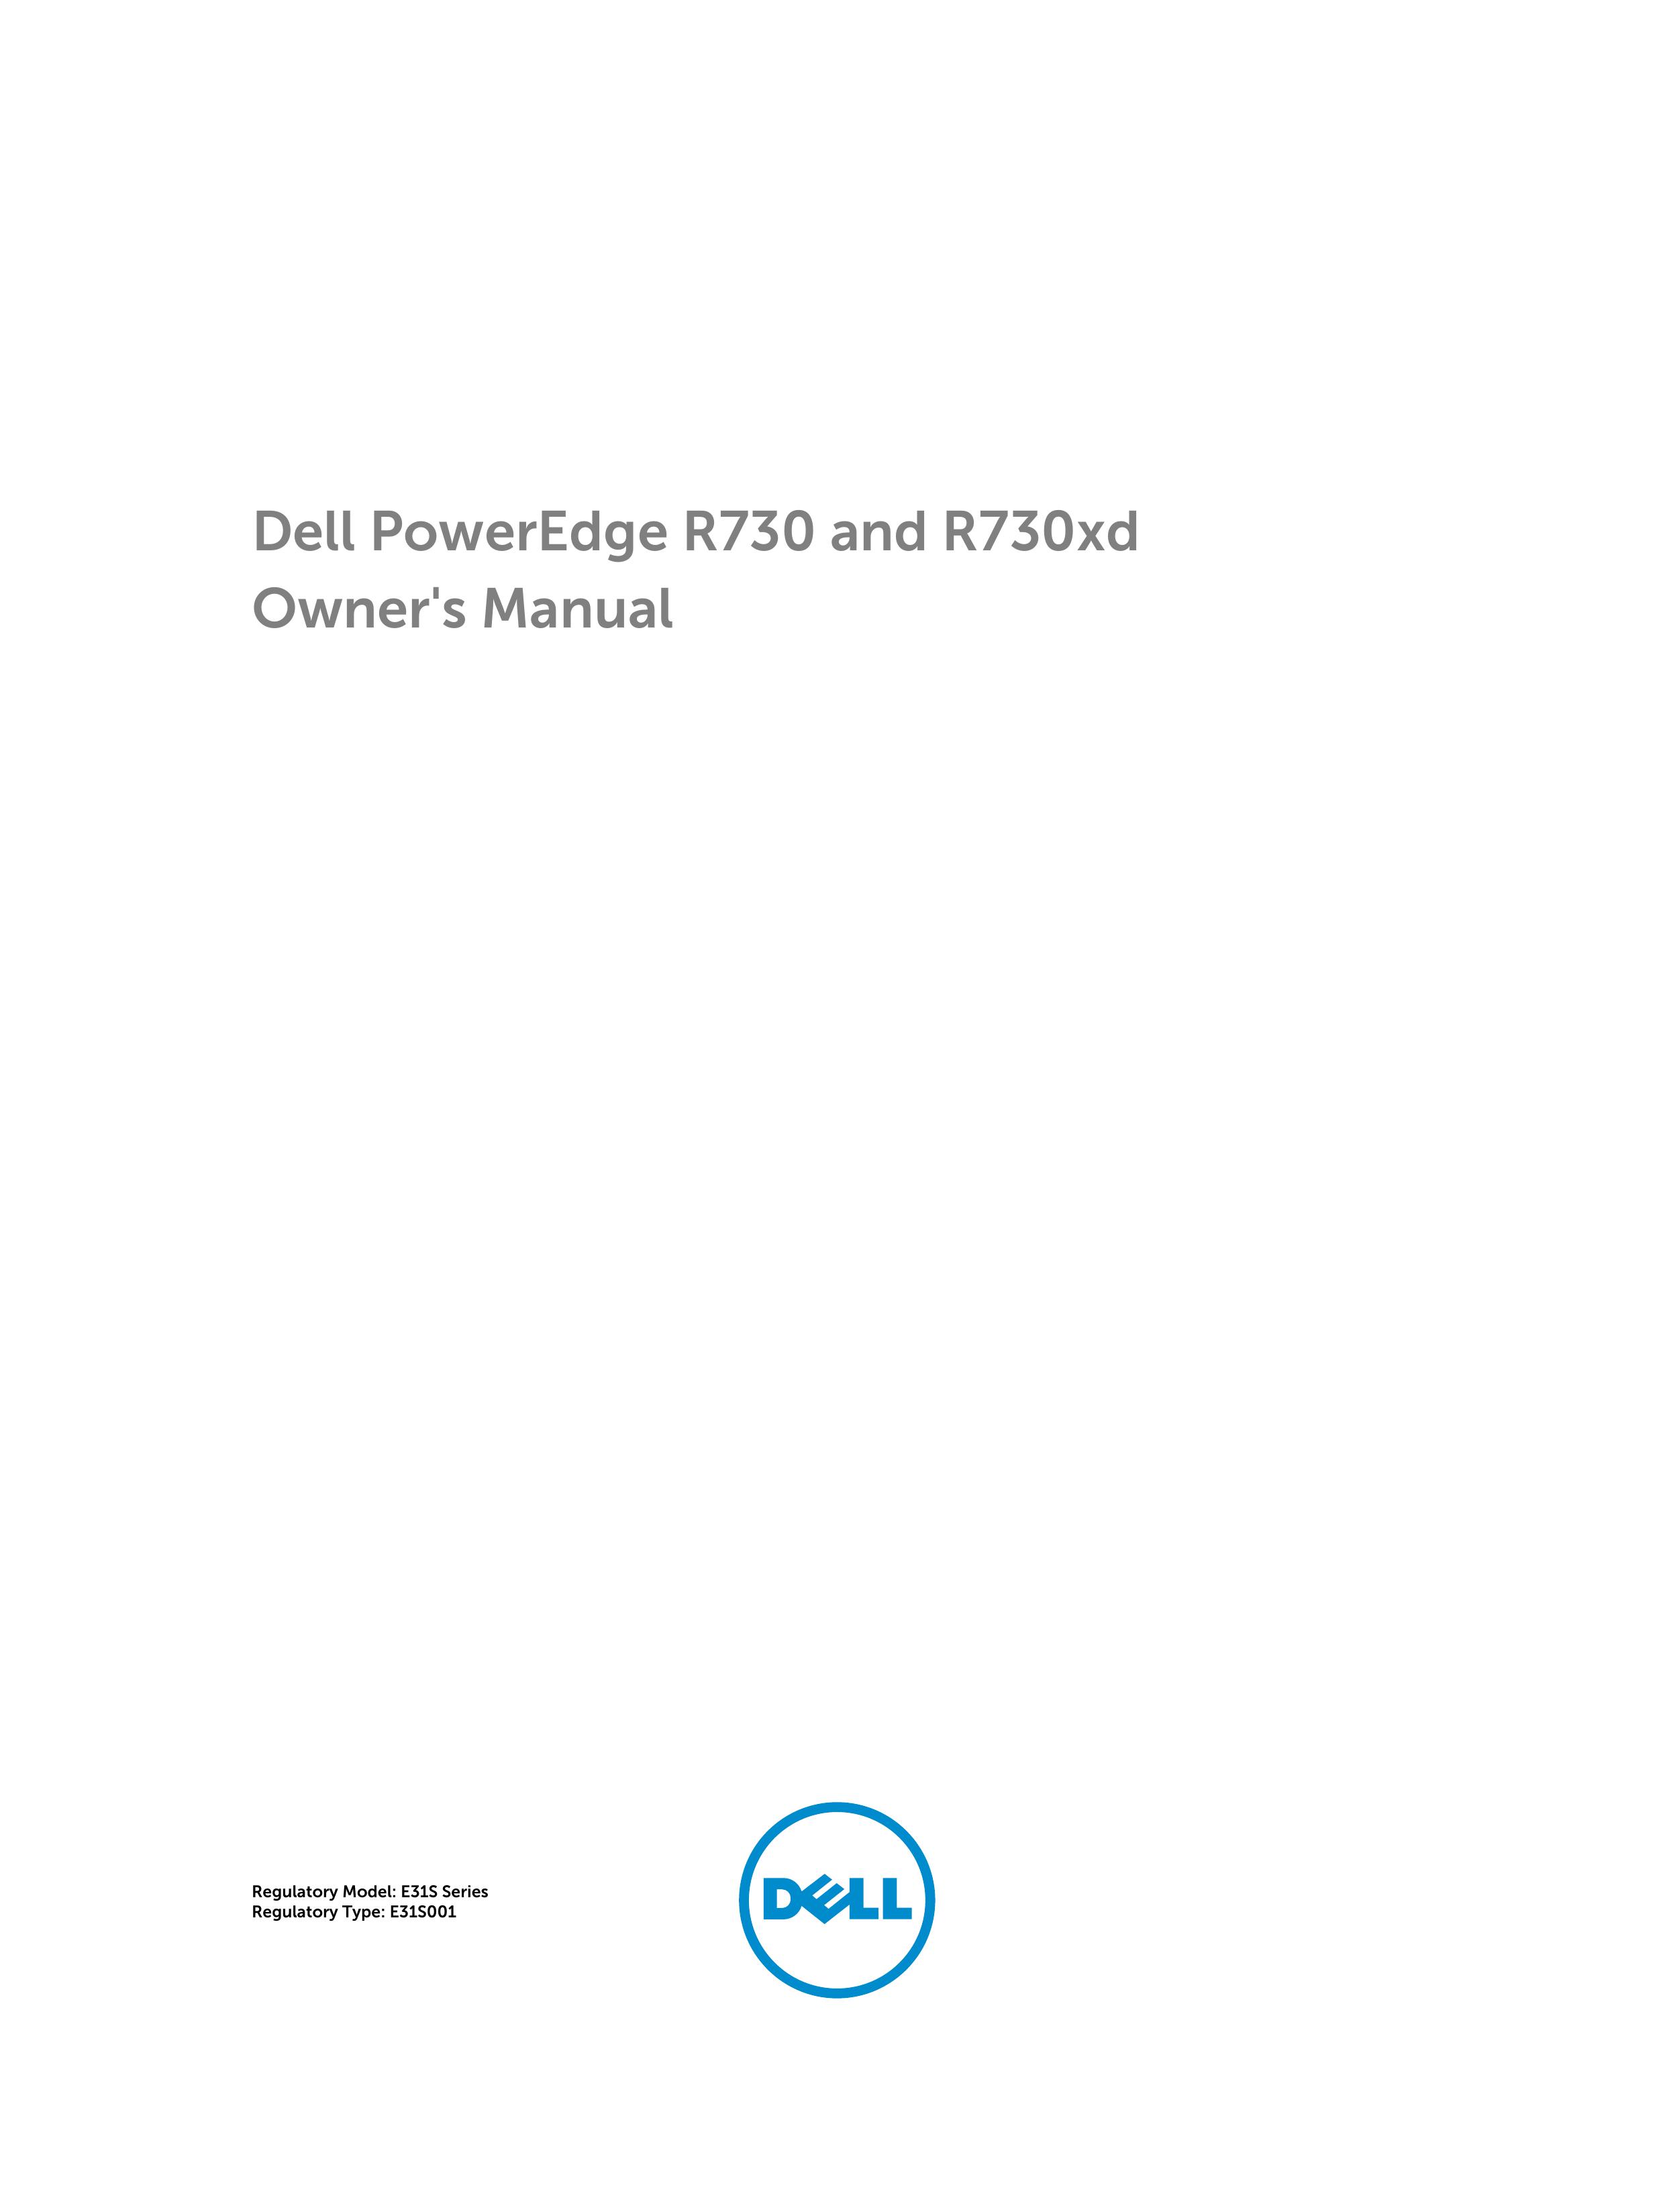 Dell R730xd Life Jacket User Manual